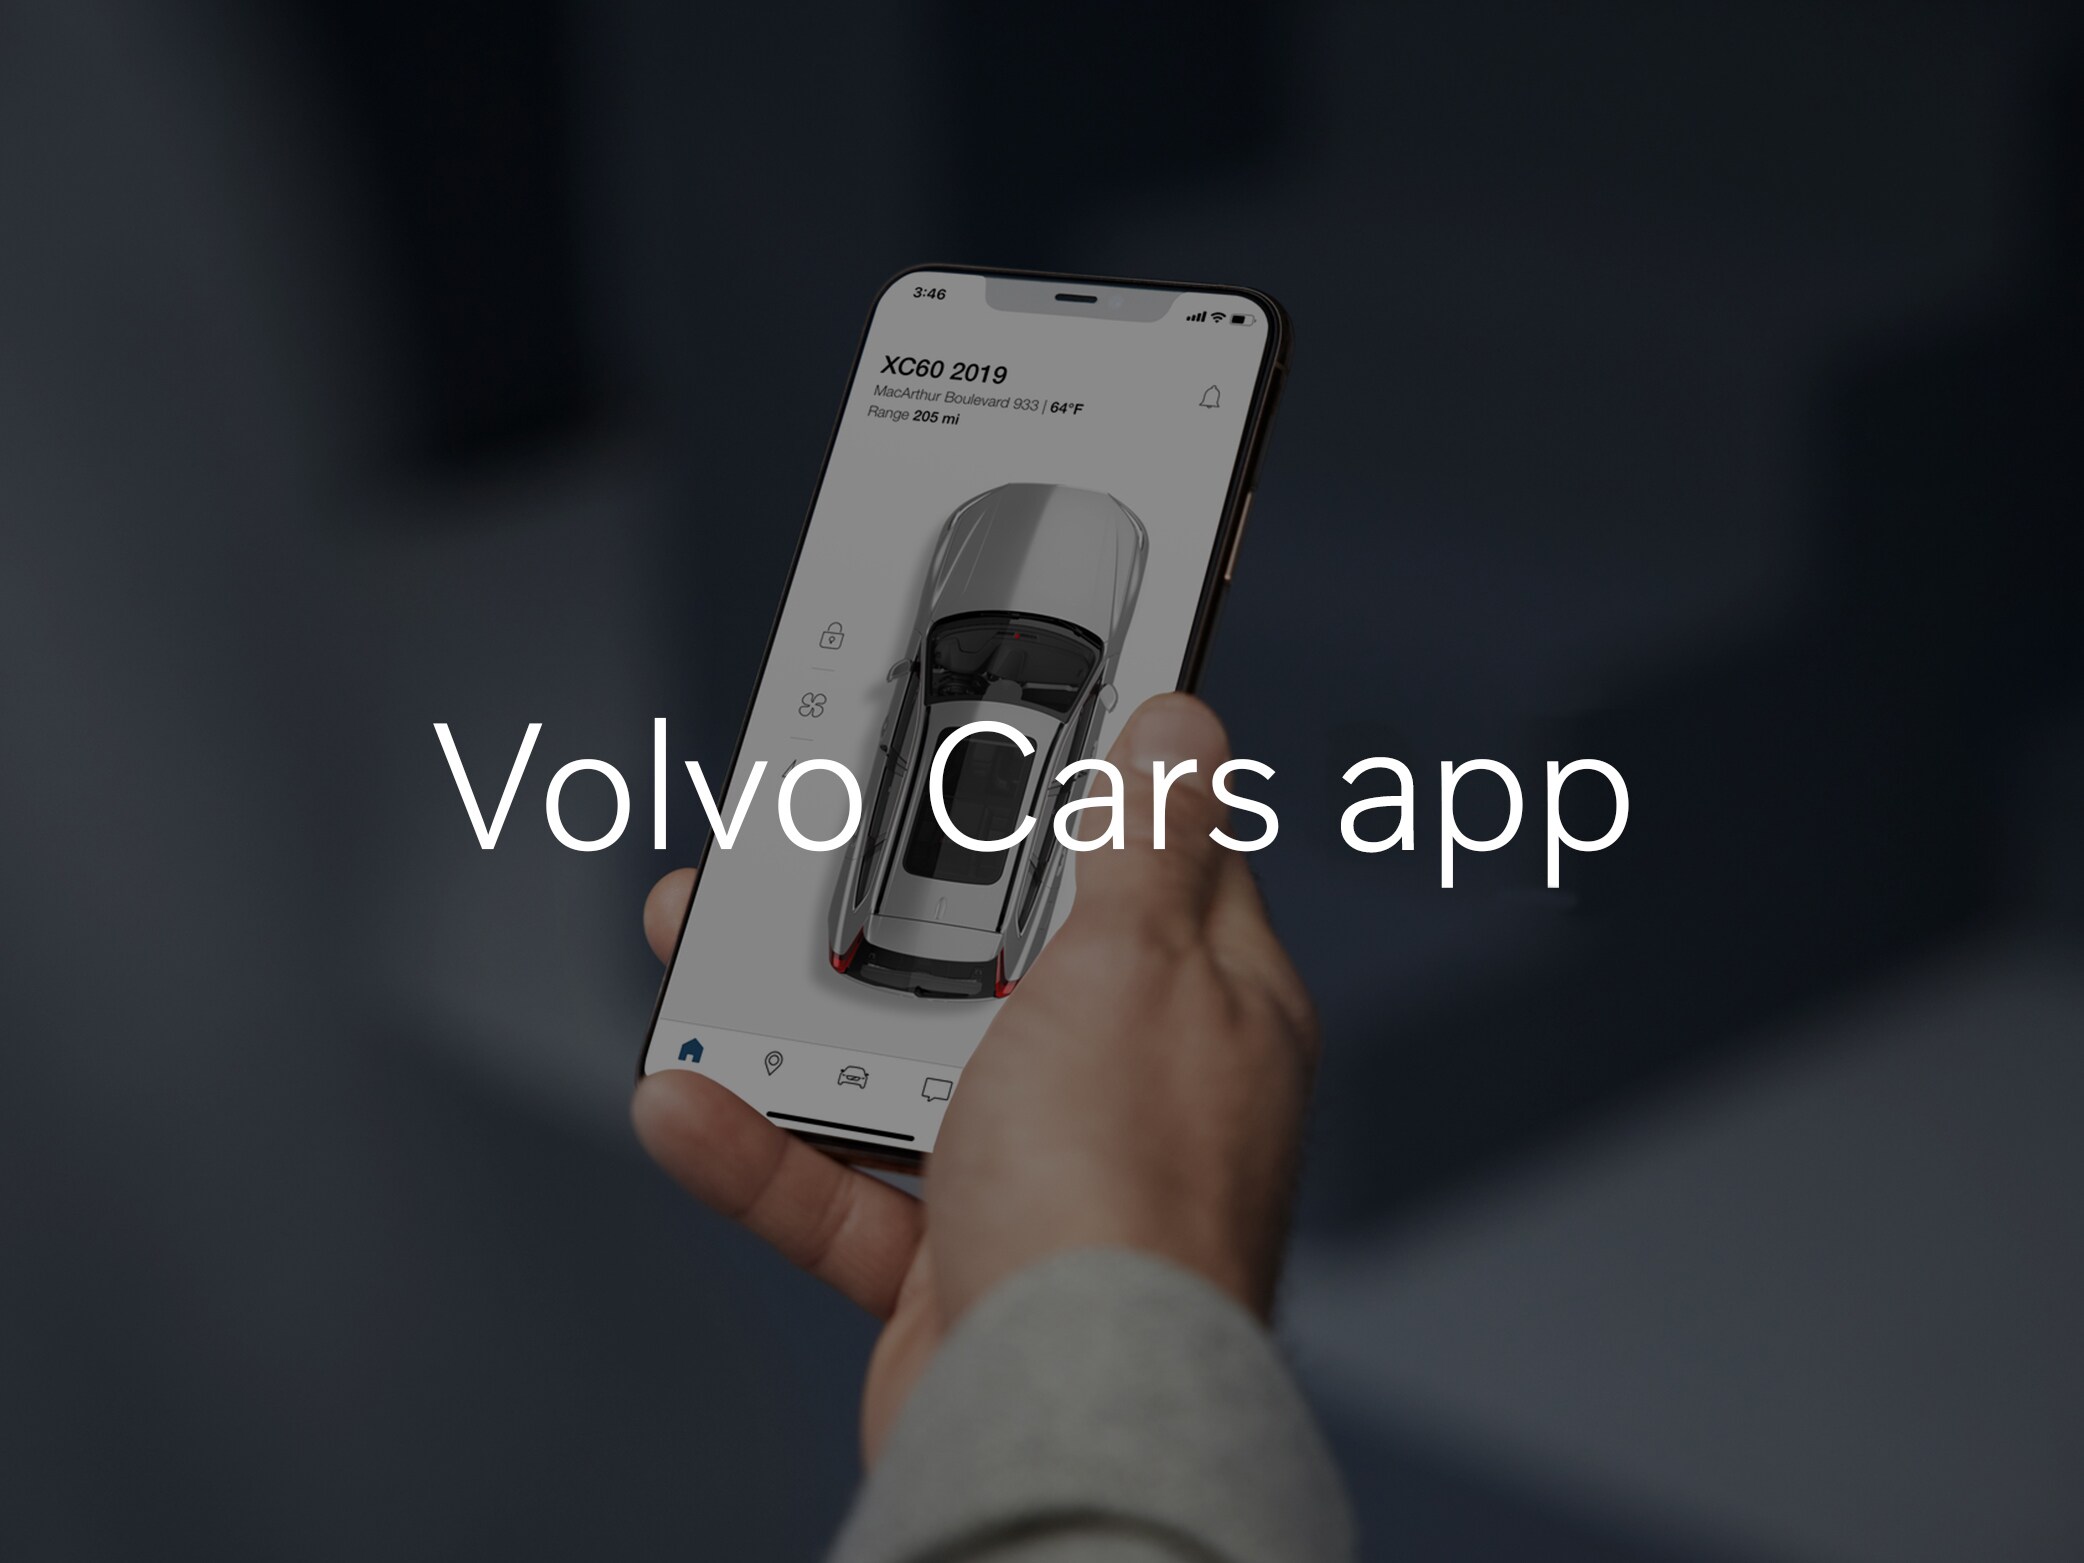 Volvo Cars app